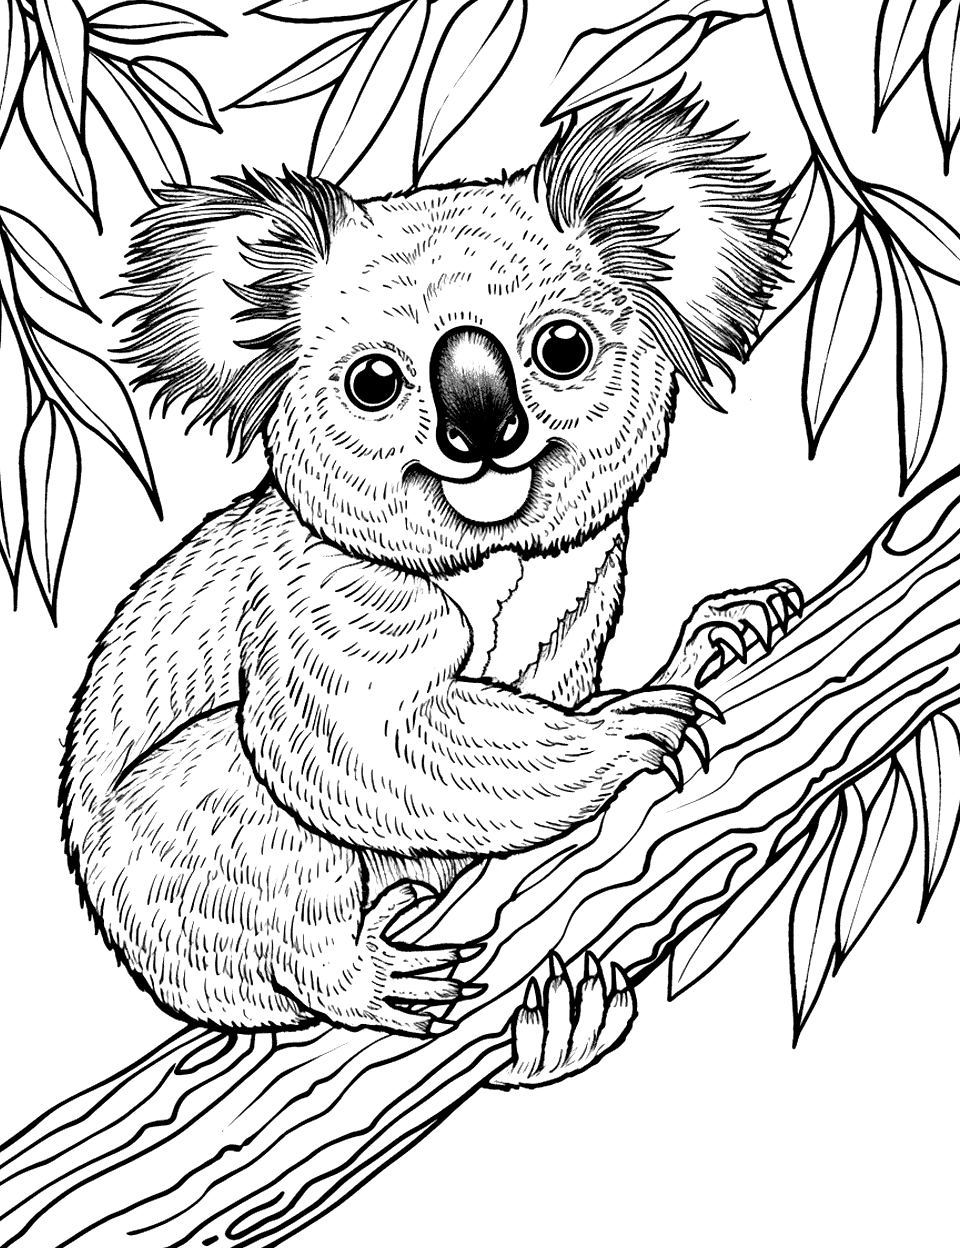 Koala in a Eucalyptus Tree Coloring Page - A koala perched calmly on a branch of a eucalyptus tree.